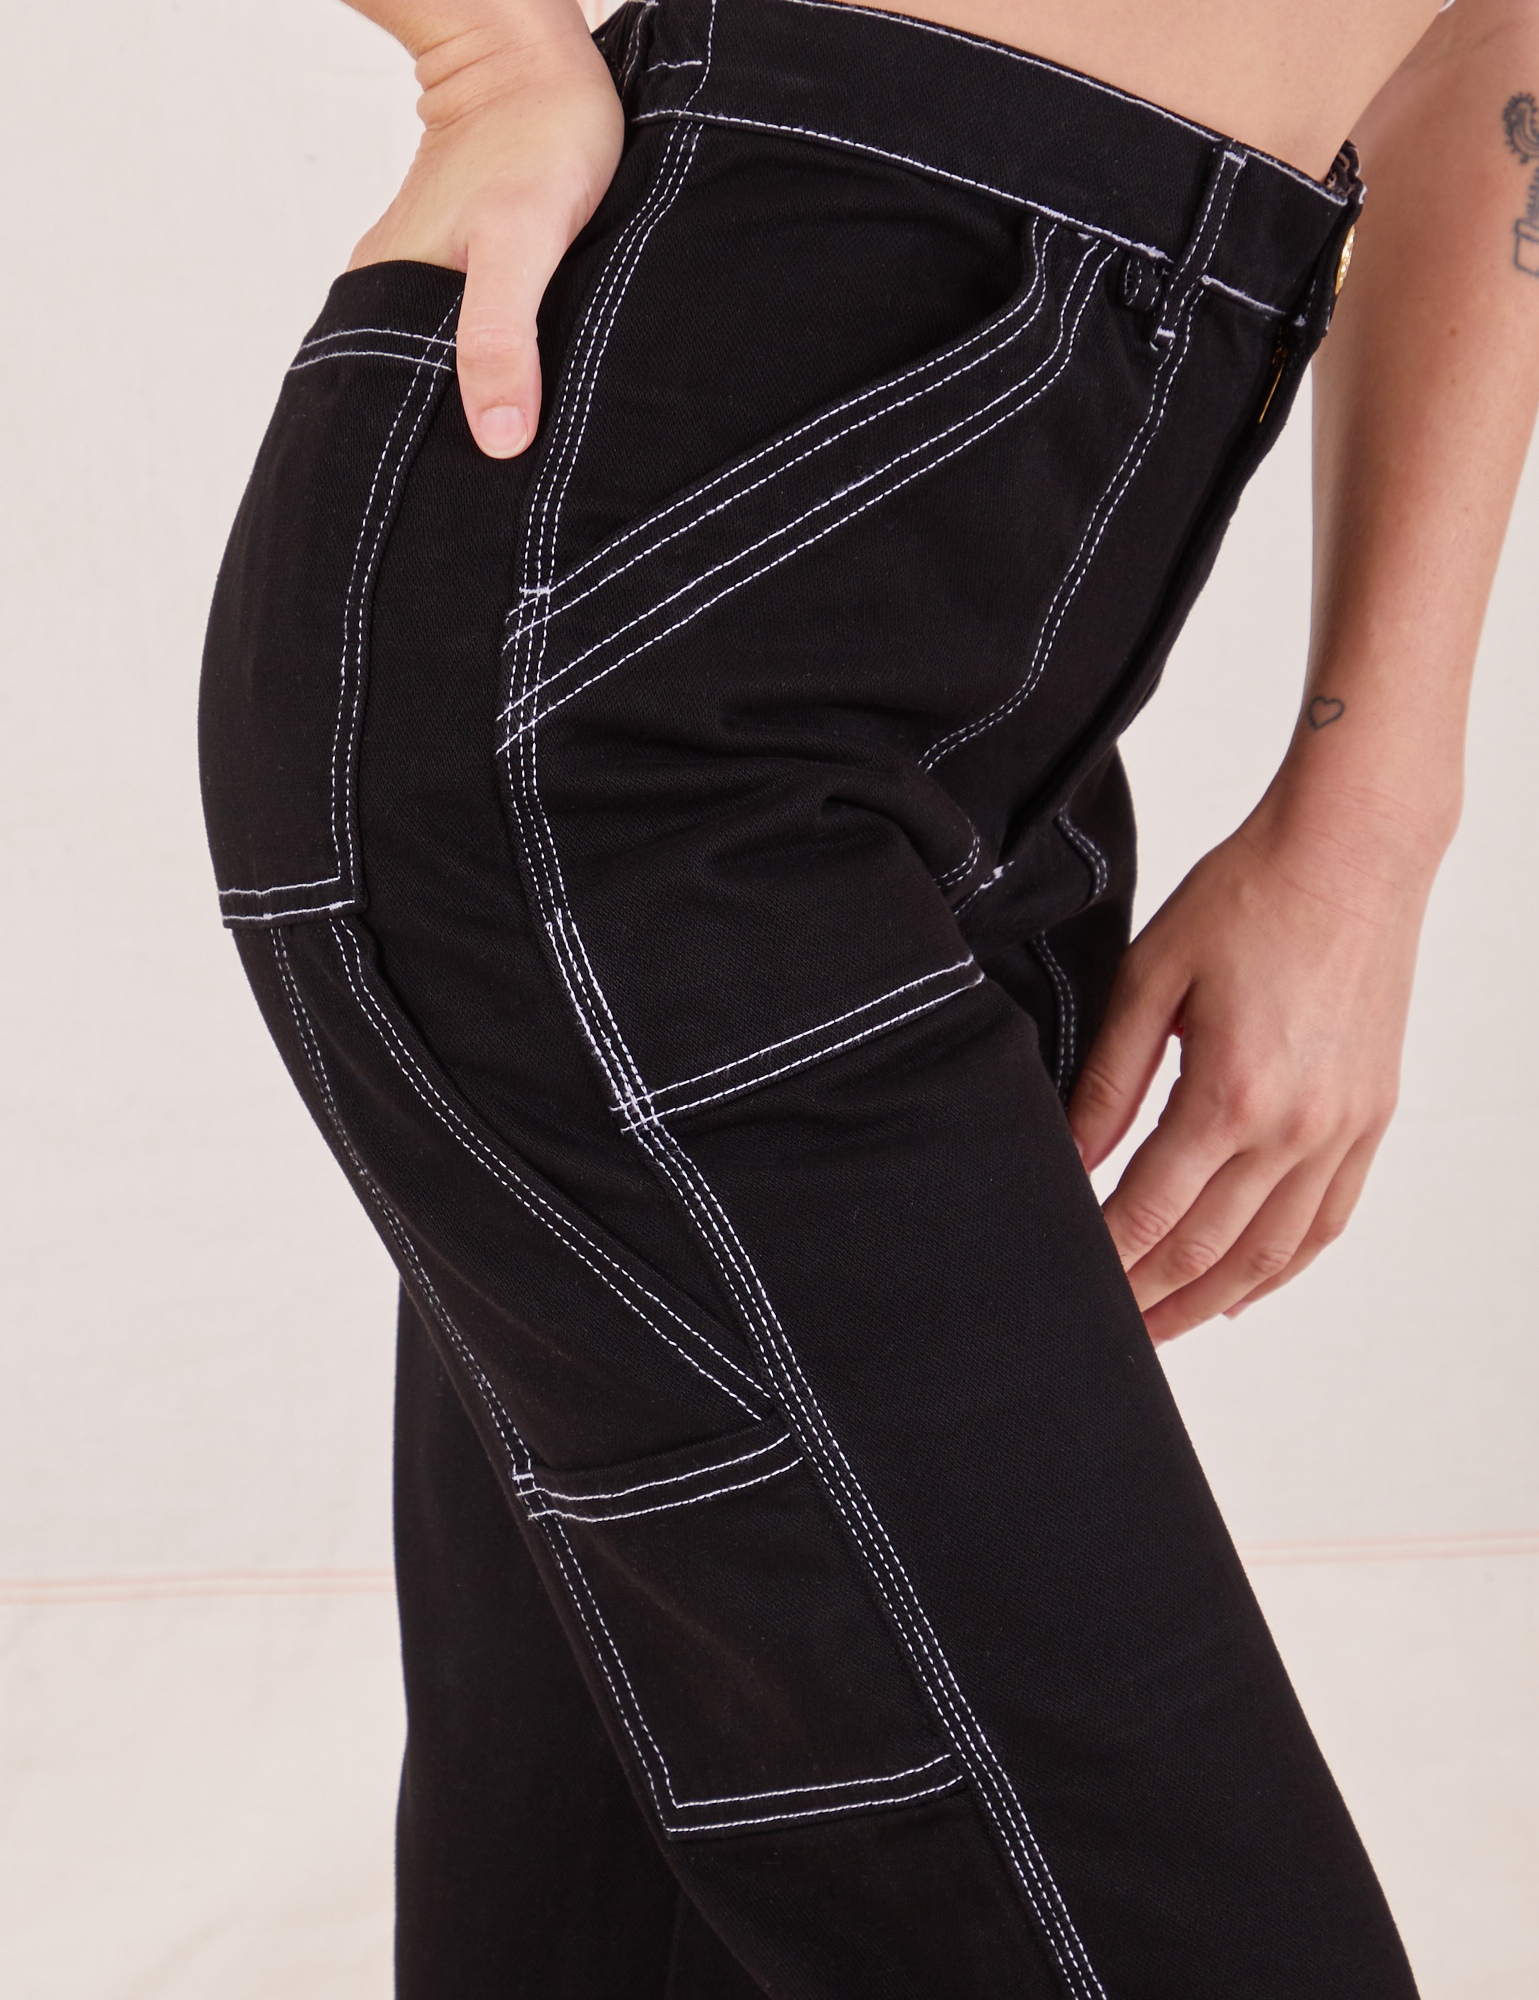 Buy NC Women's Fashion Skinny Jeans Ripped Stitching Stripes Denim Pants,  Blue, Medium at Amazon.in